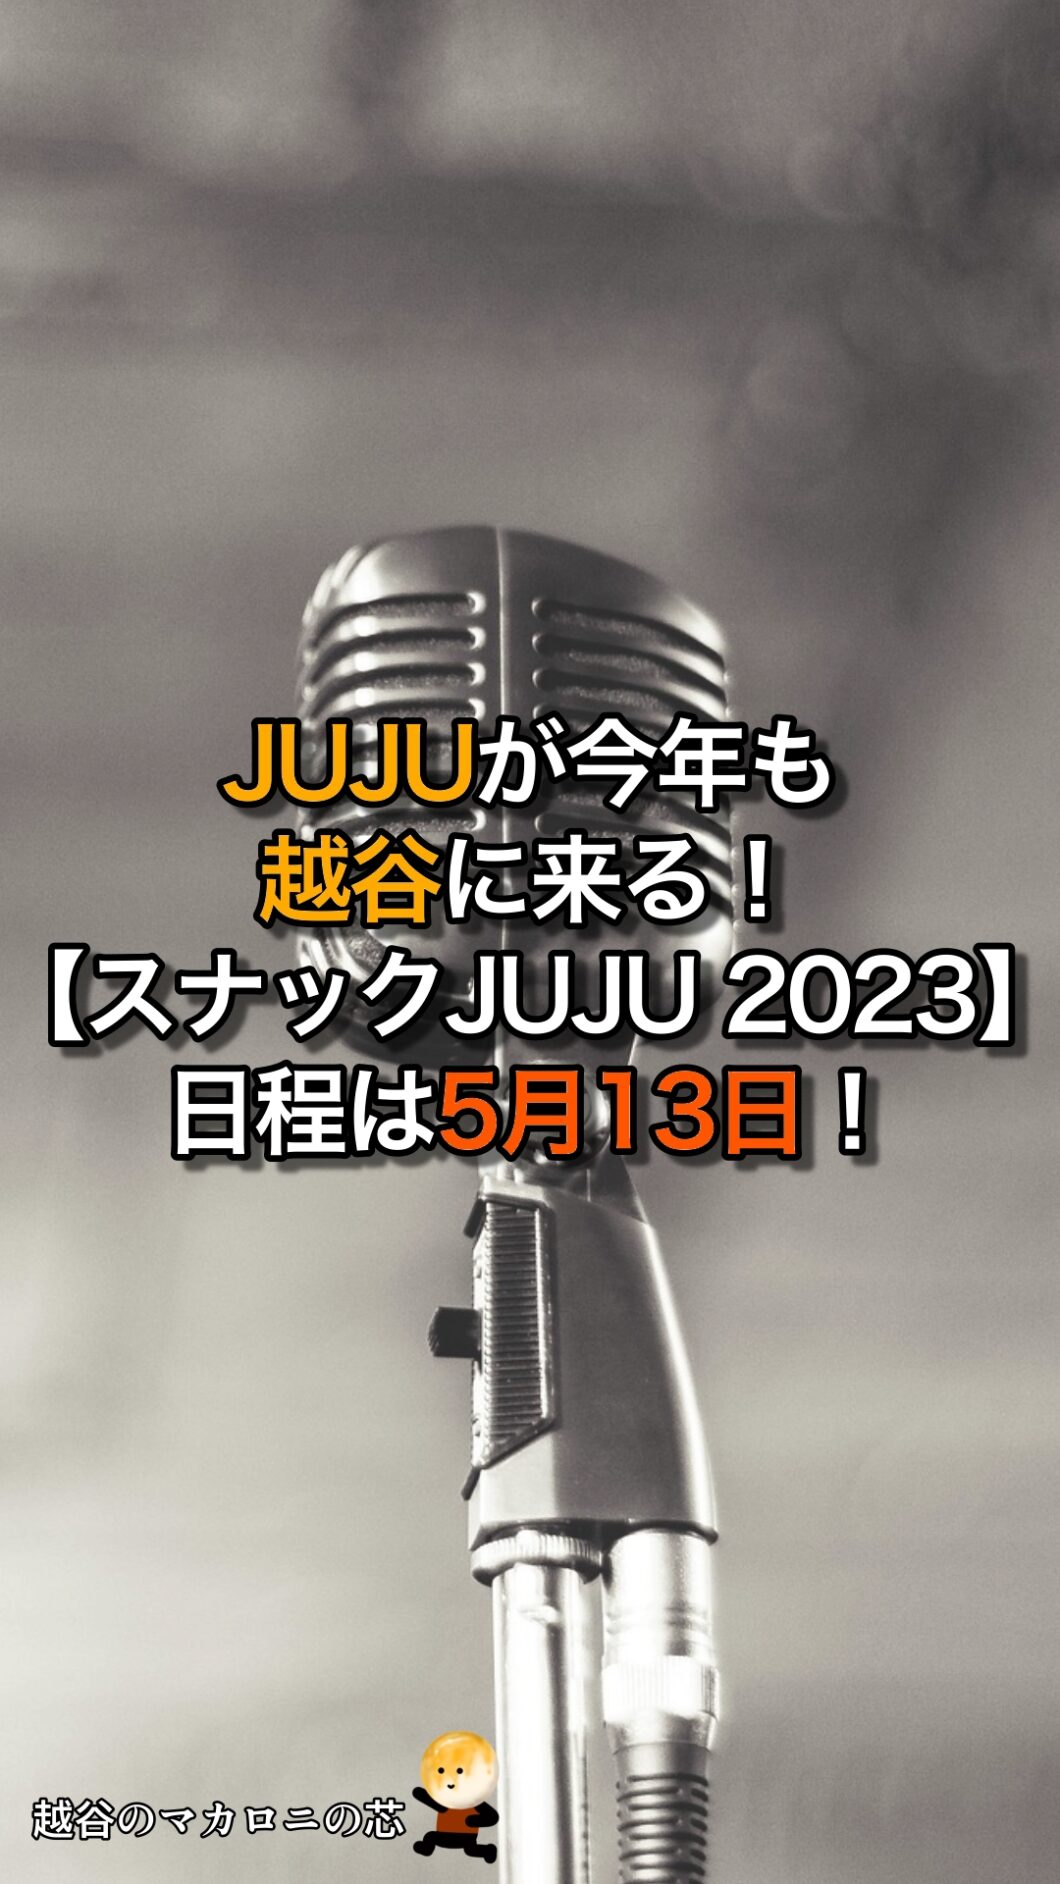 JUJU2023 ジュジュ苑スペシャル